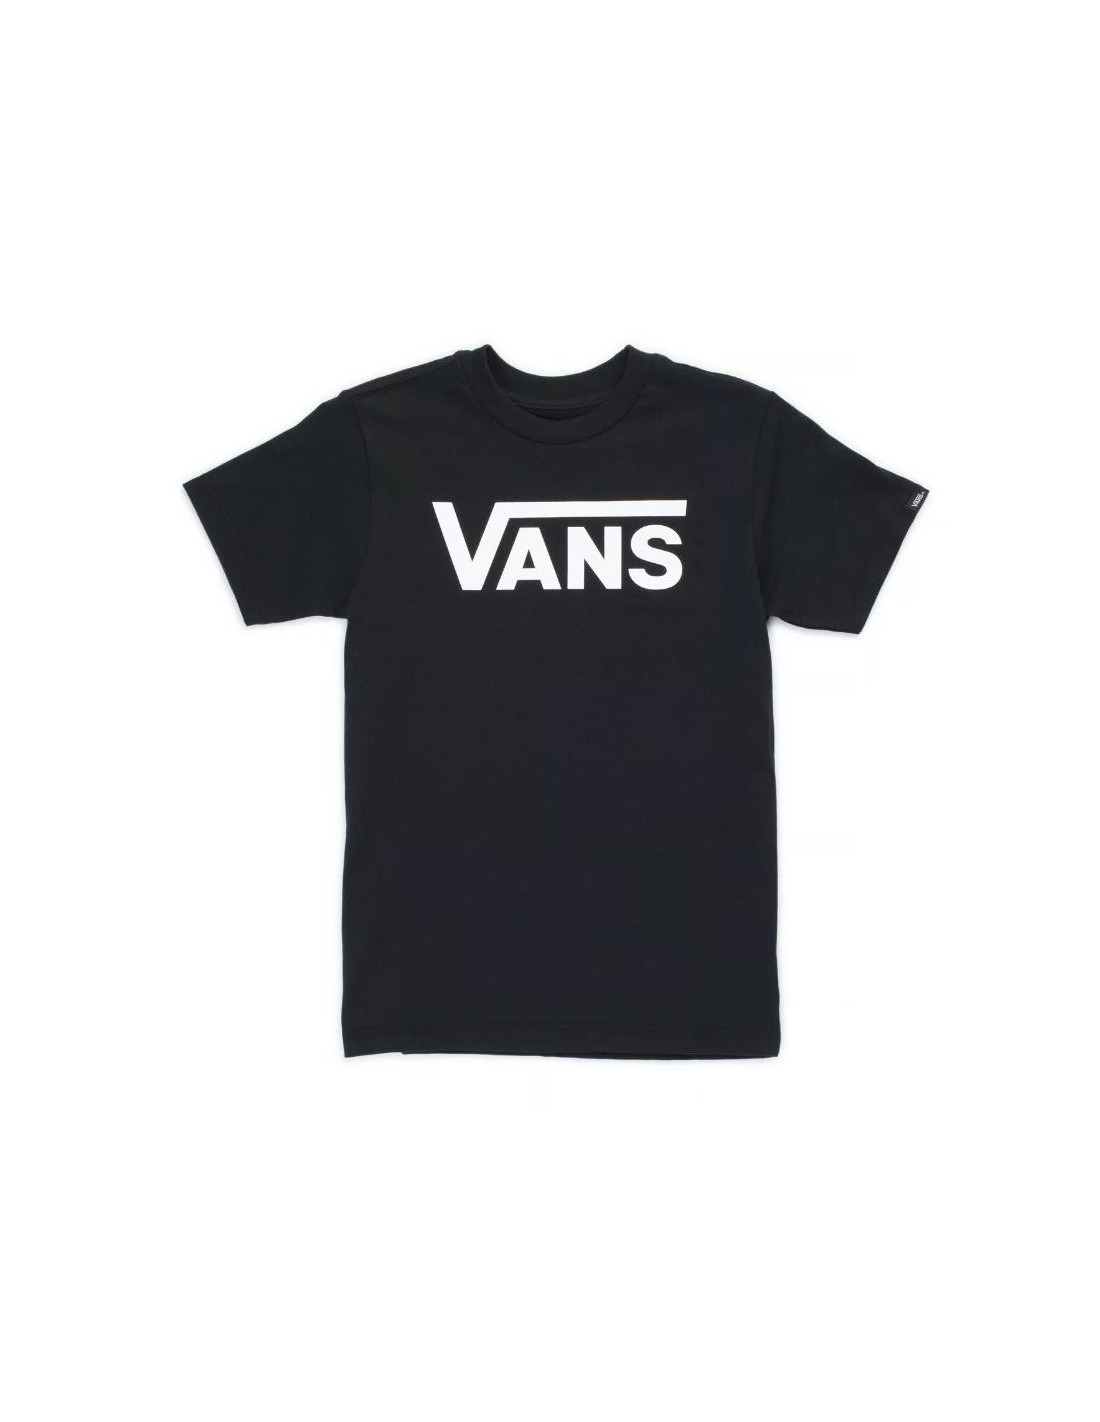 Camiseta vans drop v boys black